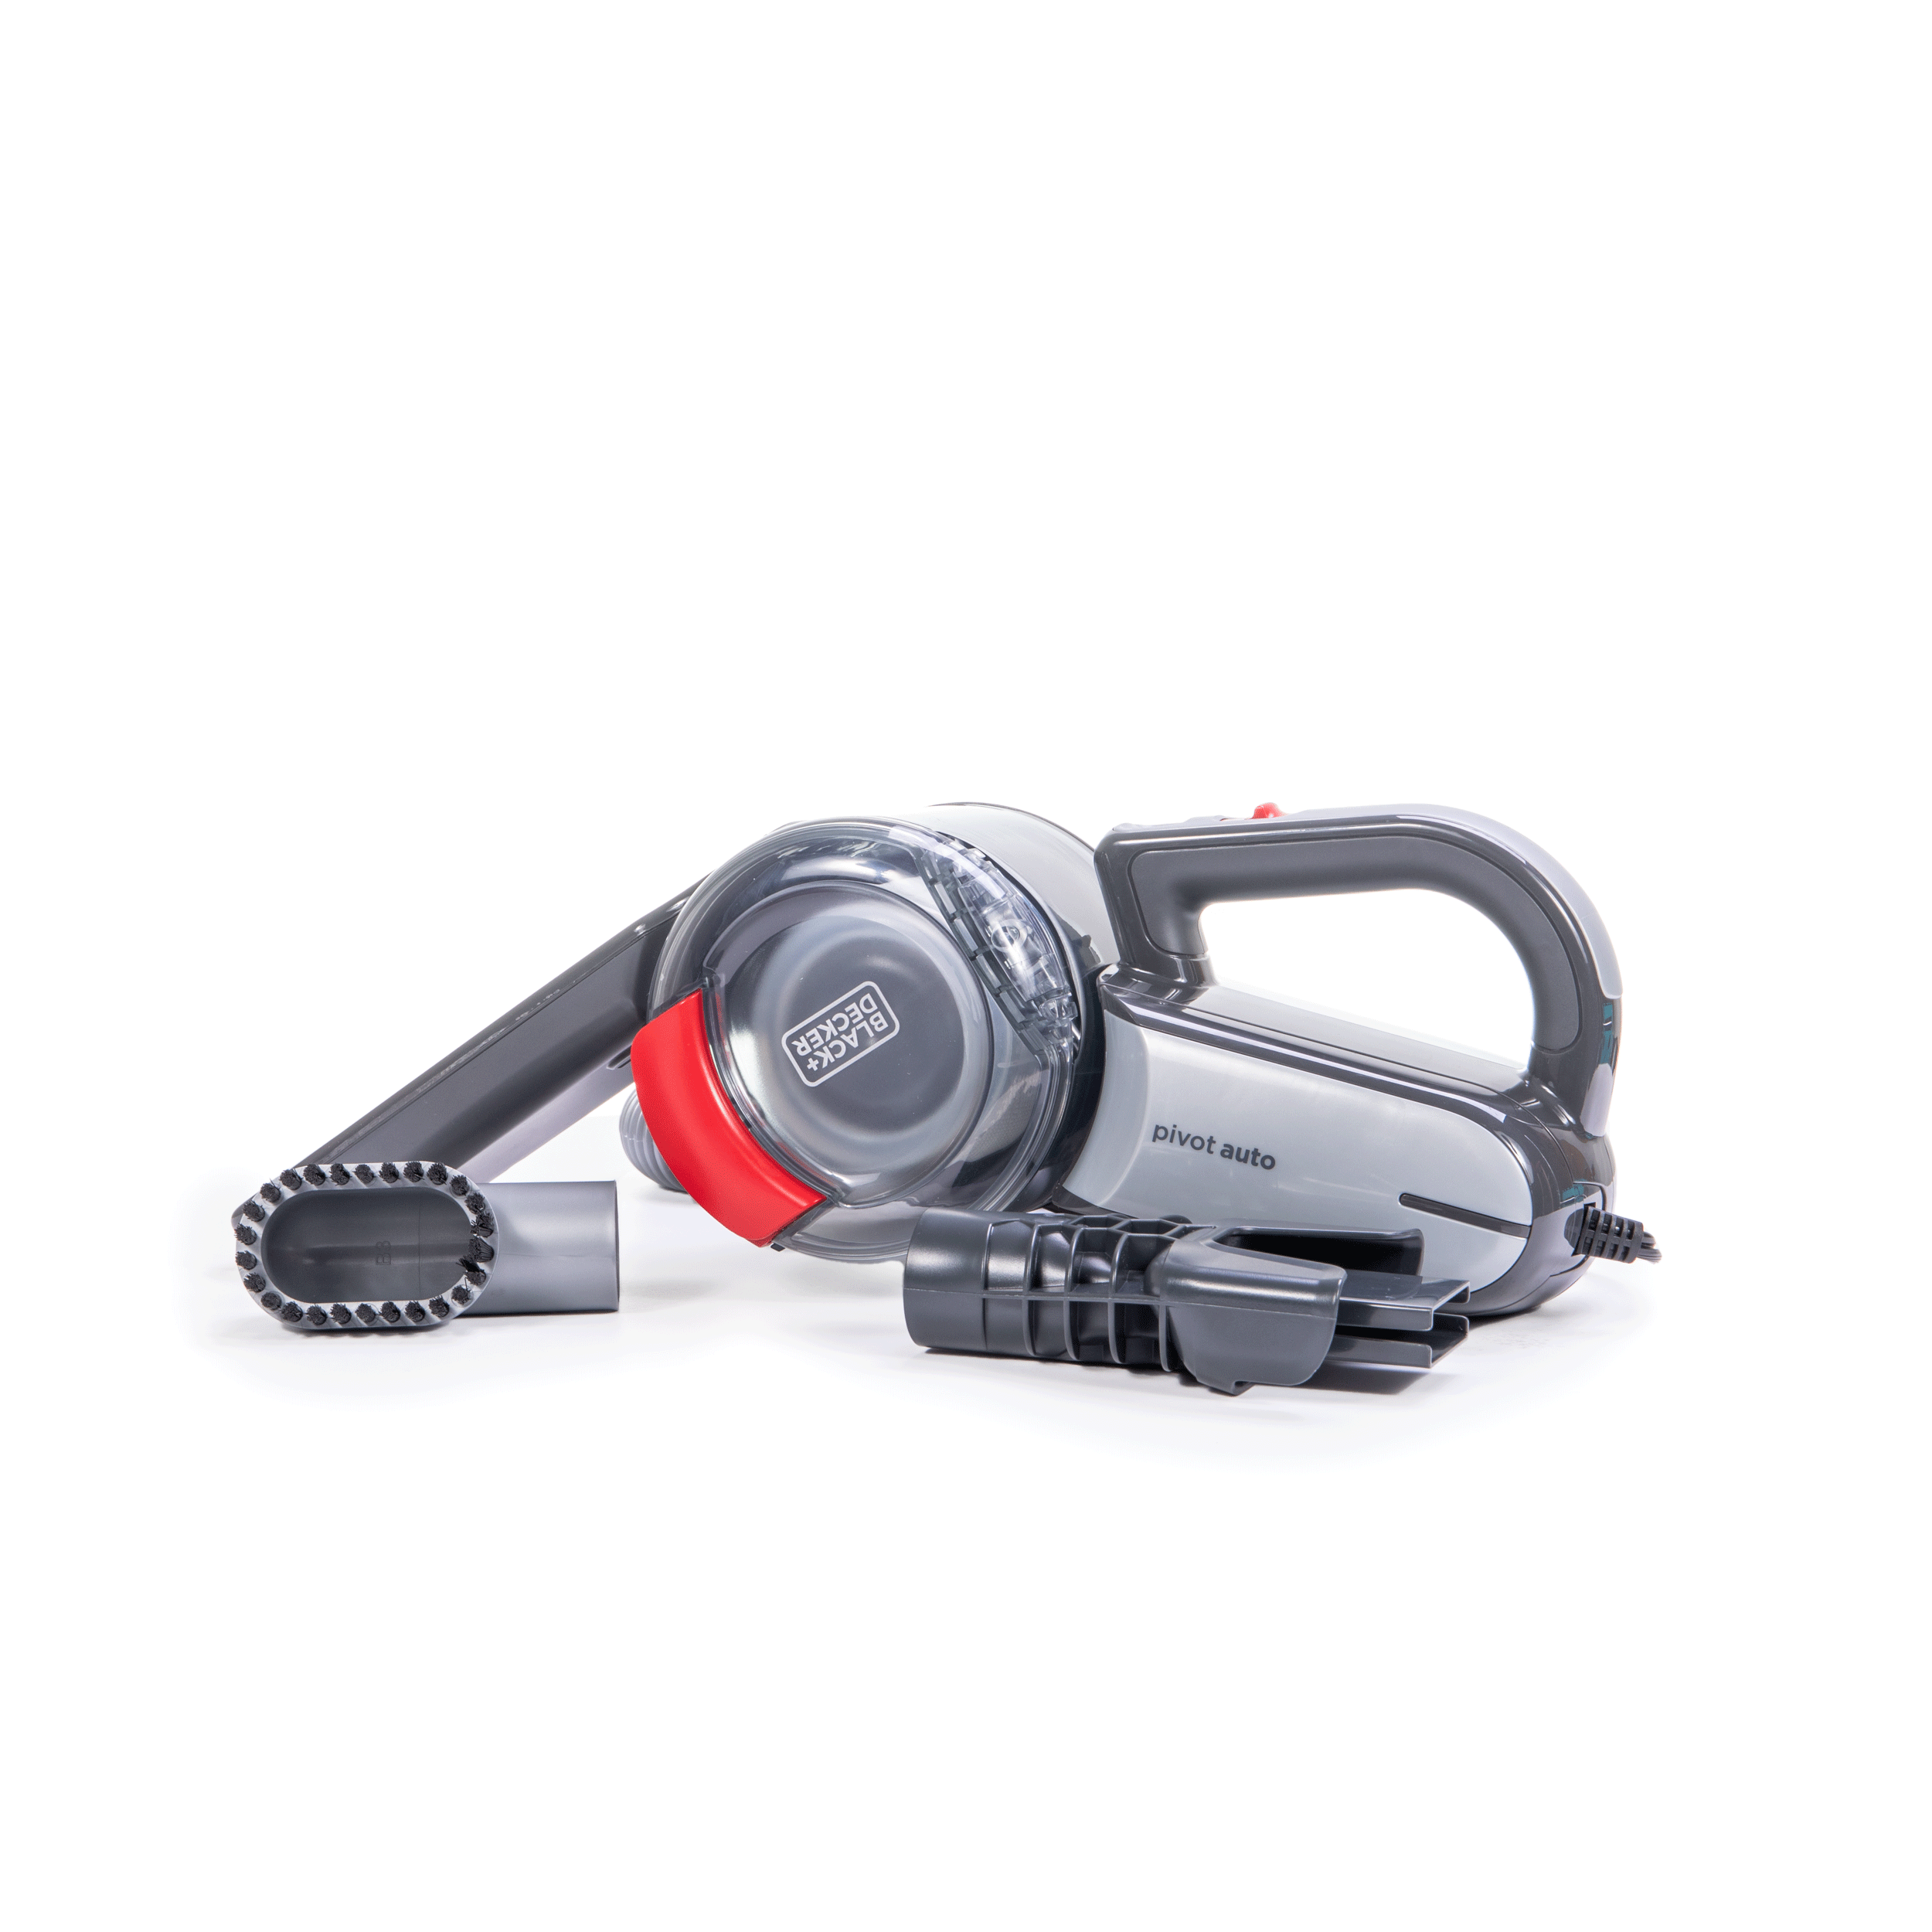 Buy Black & Decker Pivot Dustbuster® Hand Vacuum